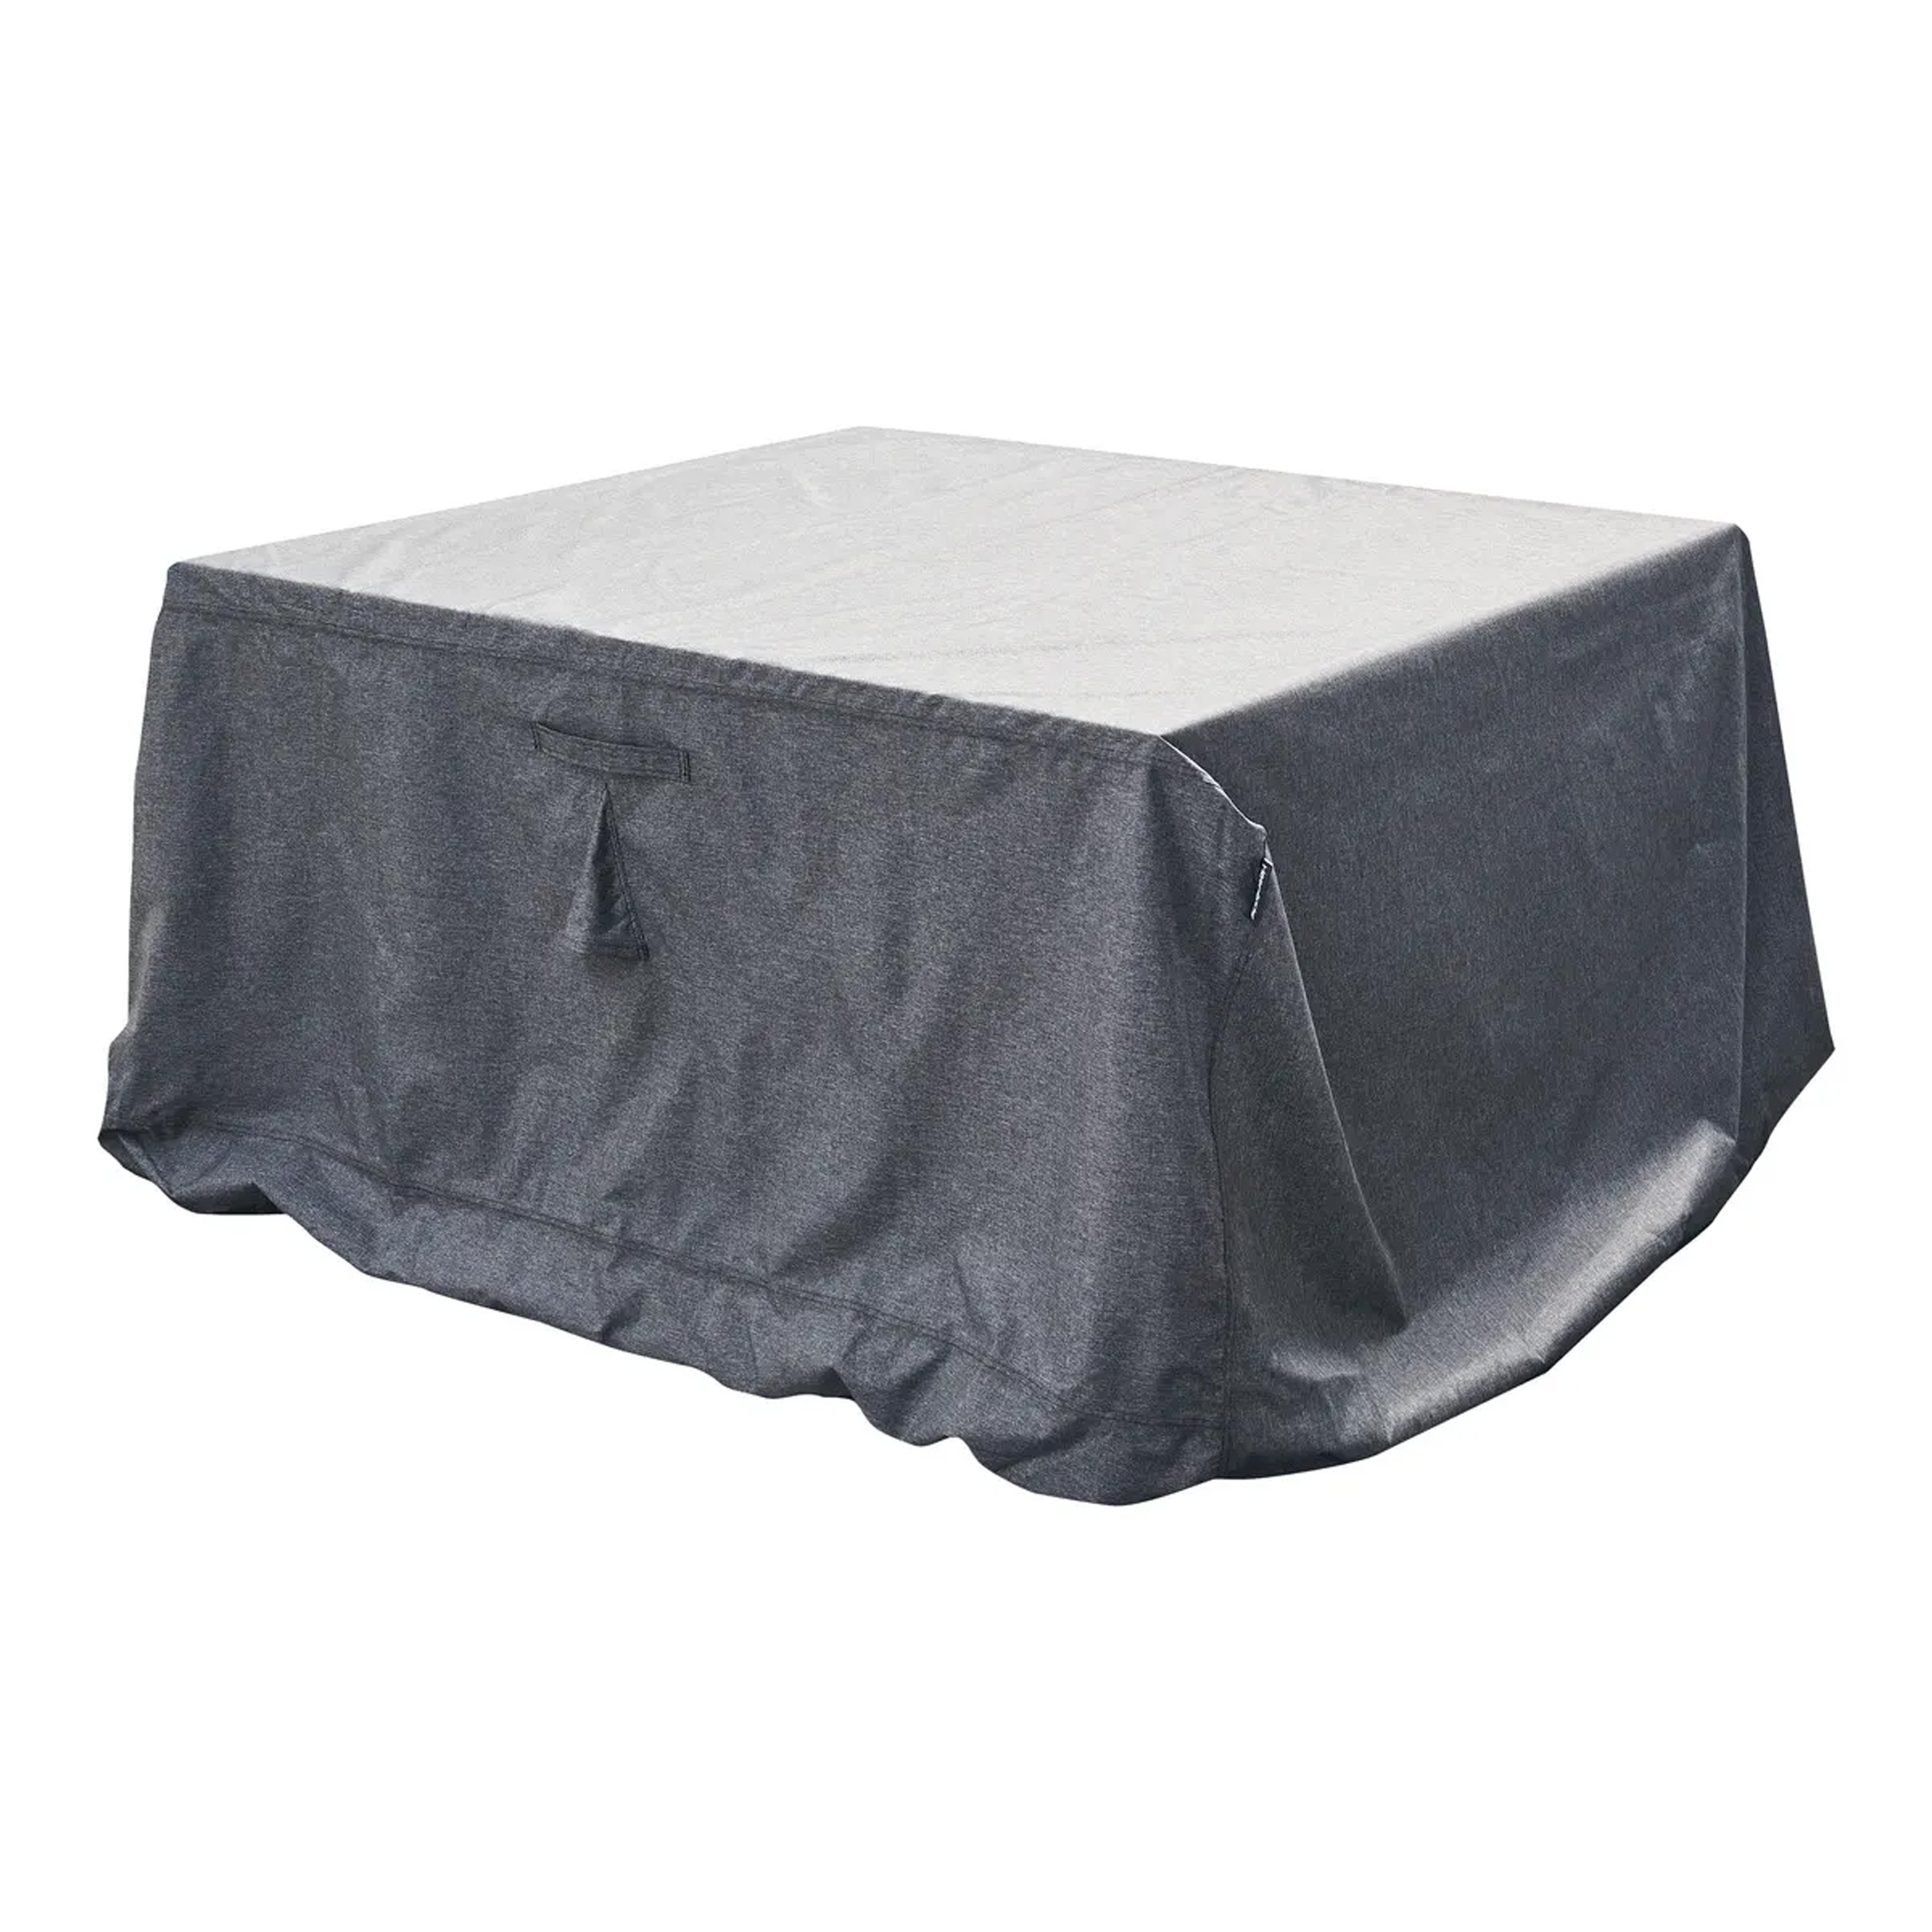 hesperide Hambo Schutzhülle für Tisch rechteckig xl - 308 x 190 x 80 cm - Hespéride - Grau